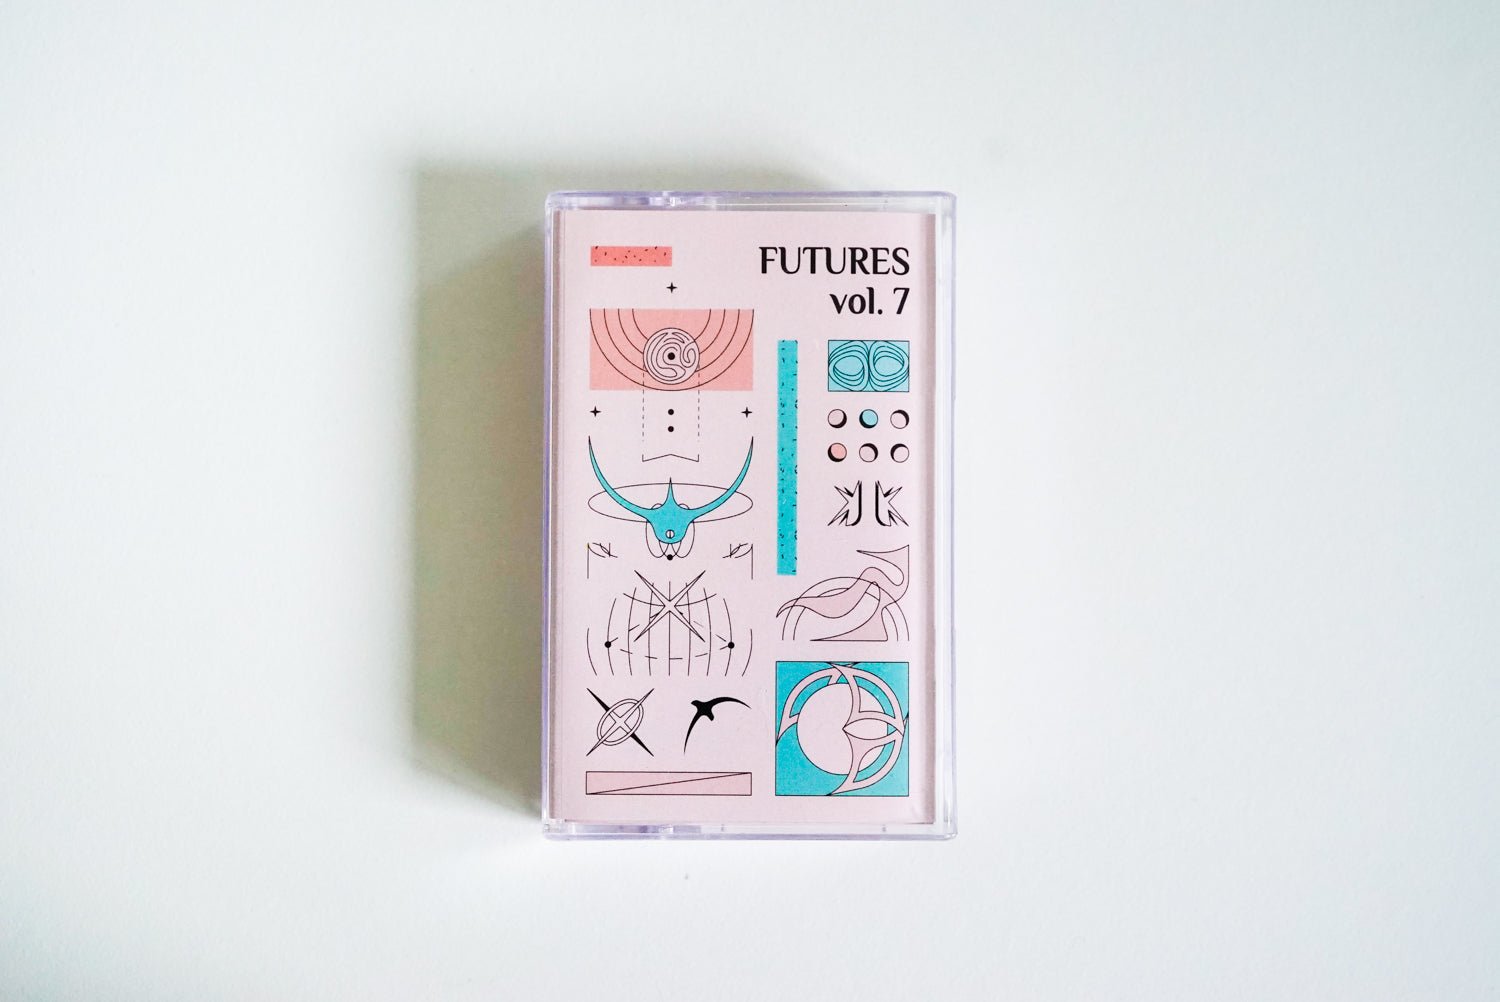 FUTURES Vol. 7 - Inner Ocean Records